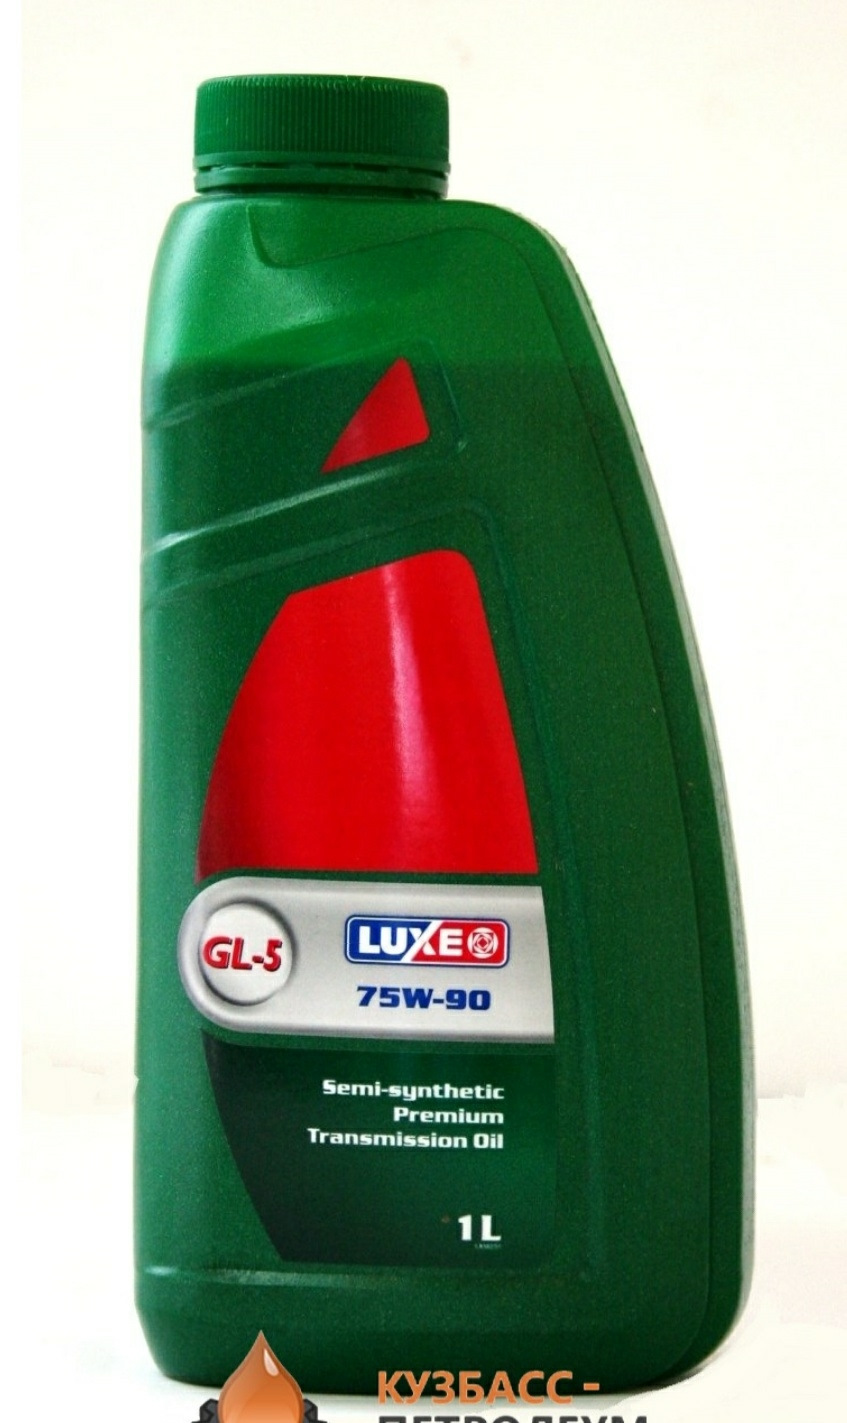 Полусинтетическое масло люкс. Luxe 75w90 gl-5 3л. Luxe 75w90 gl-4/5. Трансмиссионное масло Luxe 75w90. Luxe 75w90 gl4 1l.